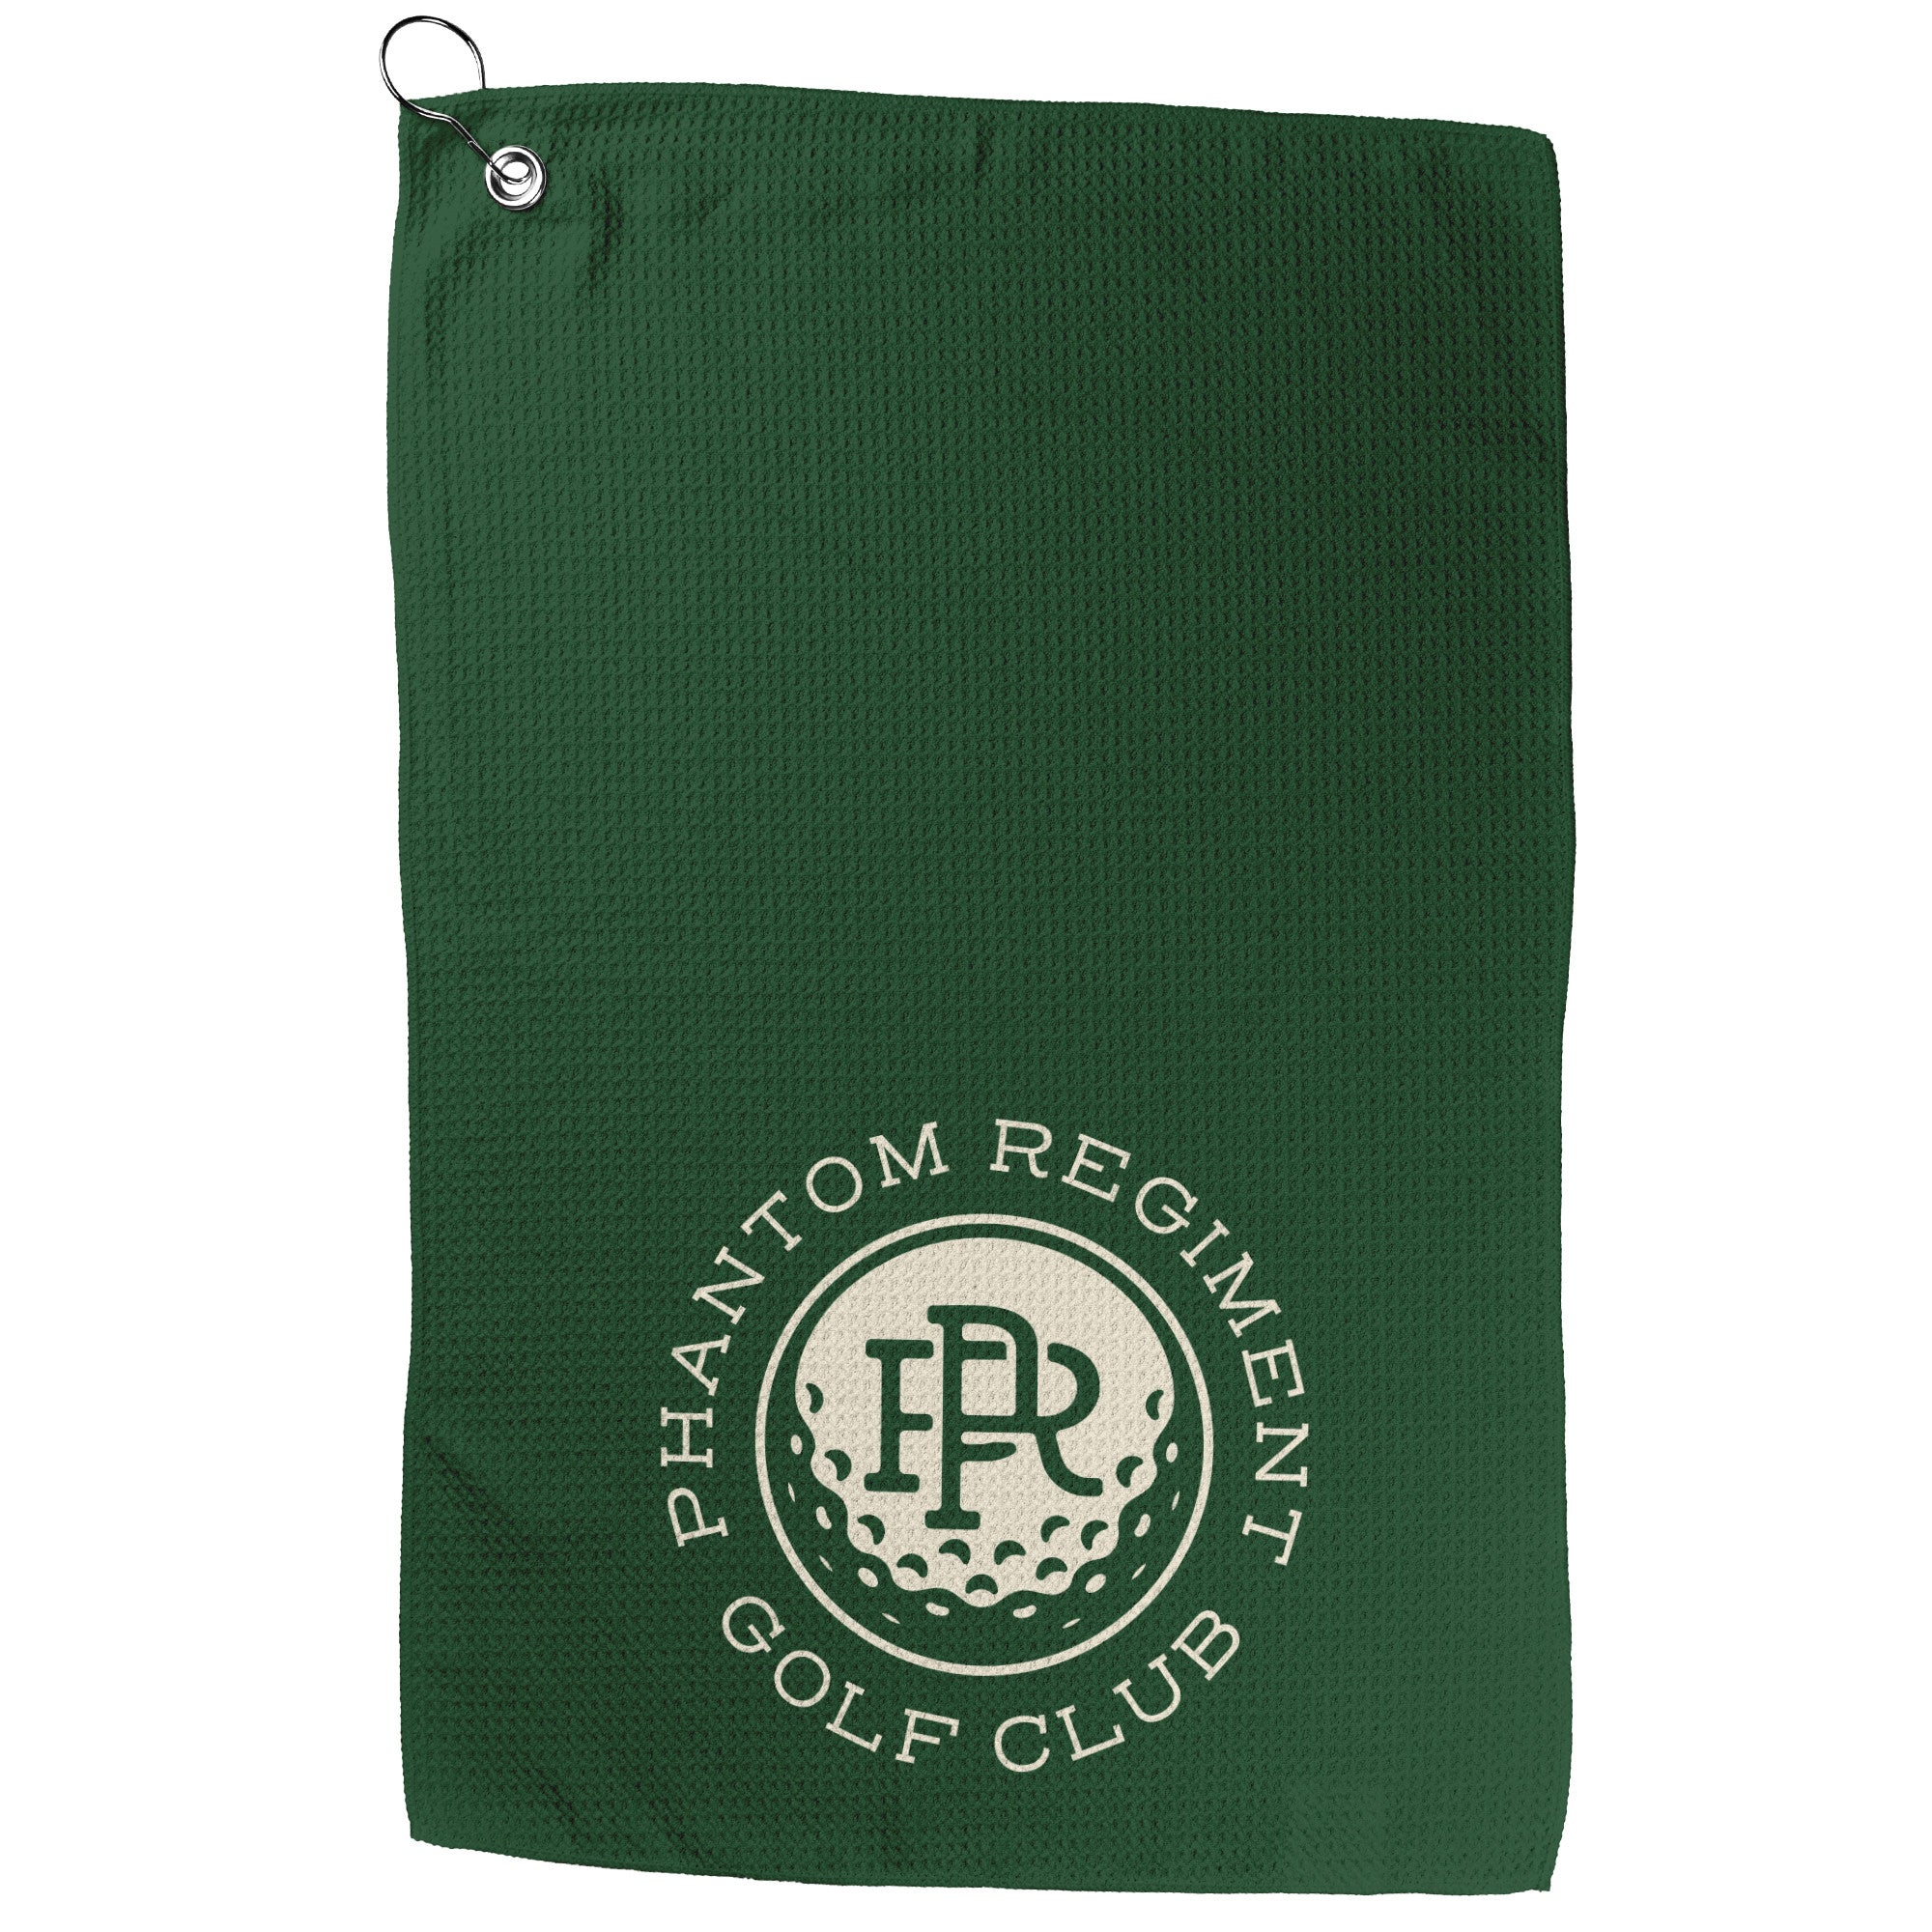 PR Golf Club Towel